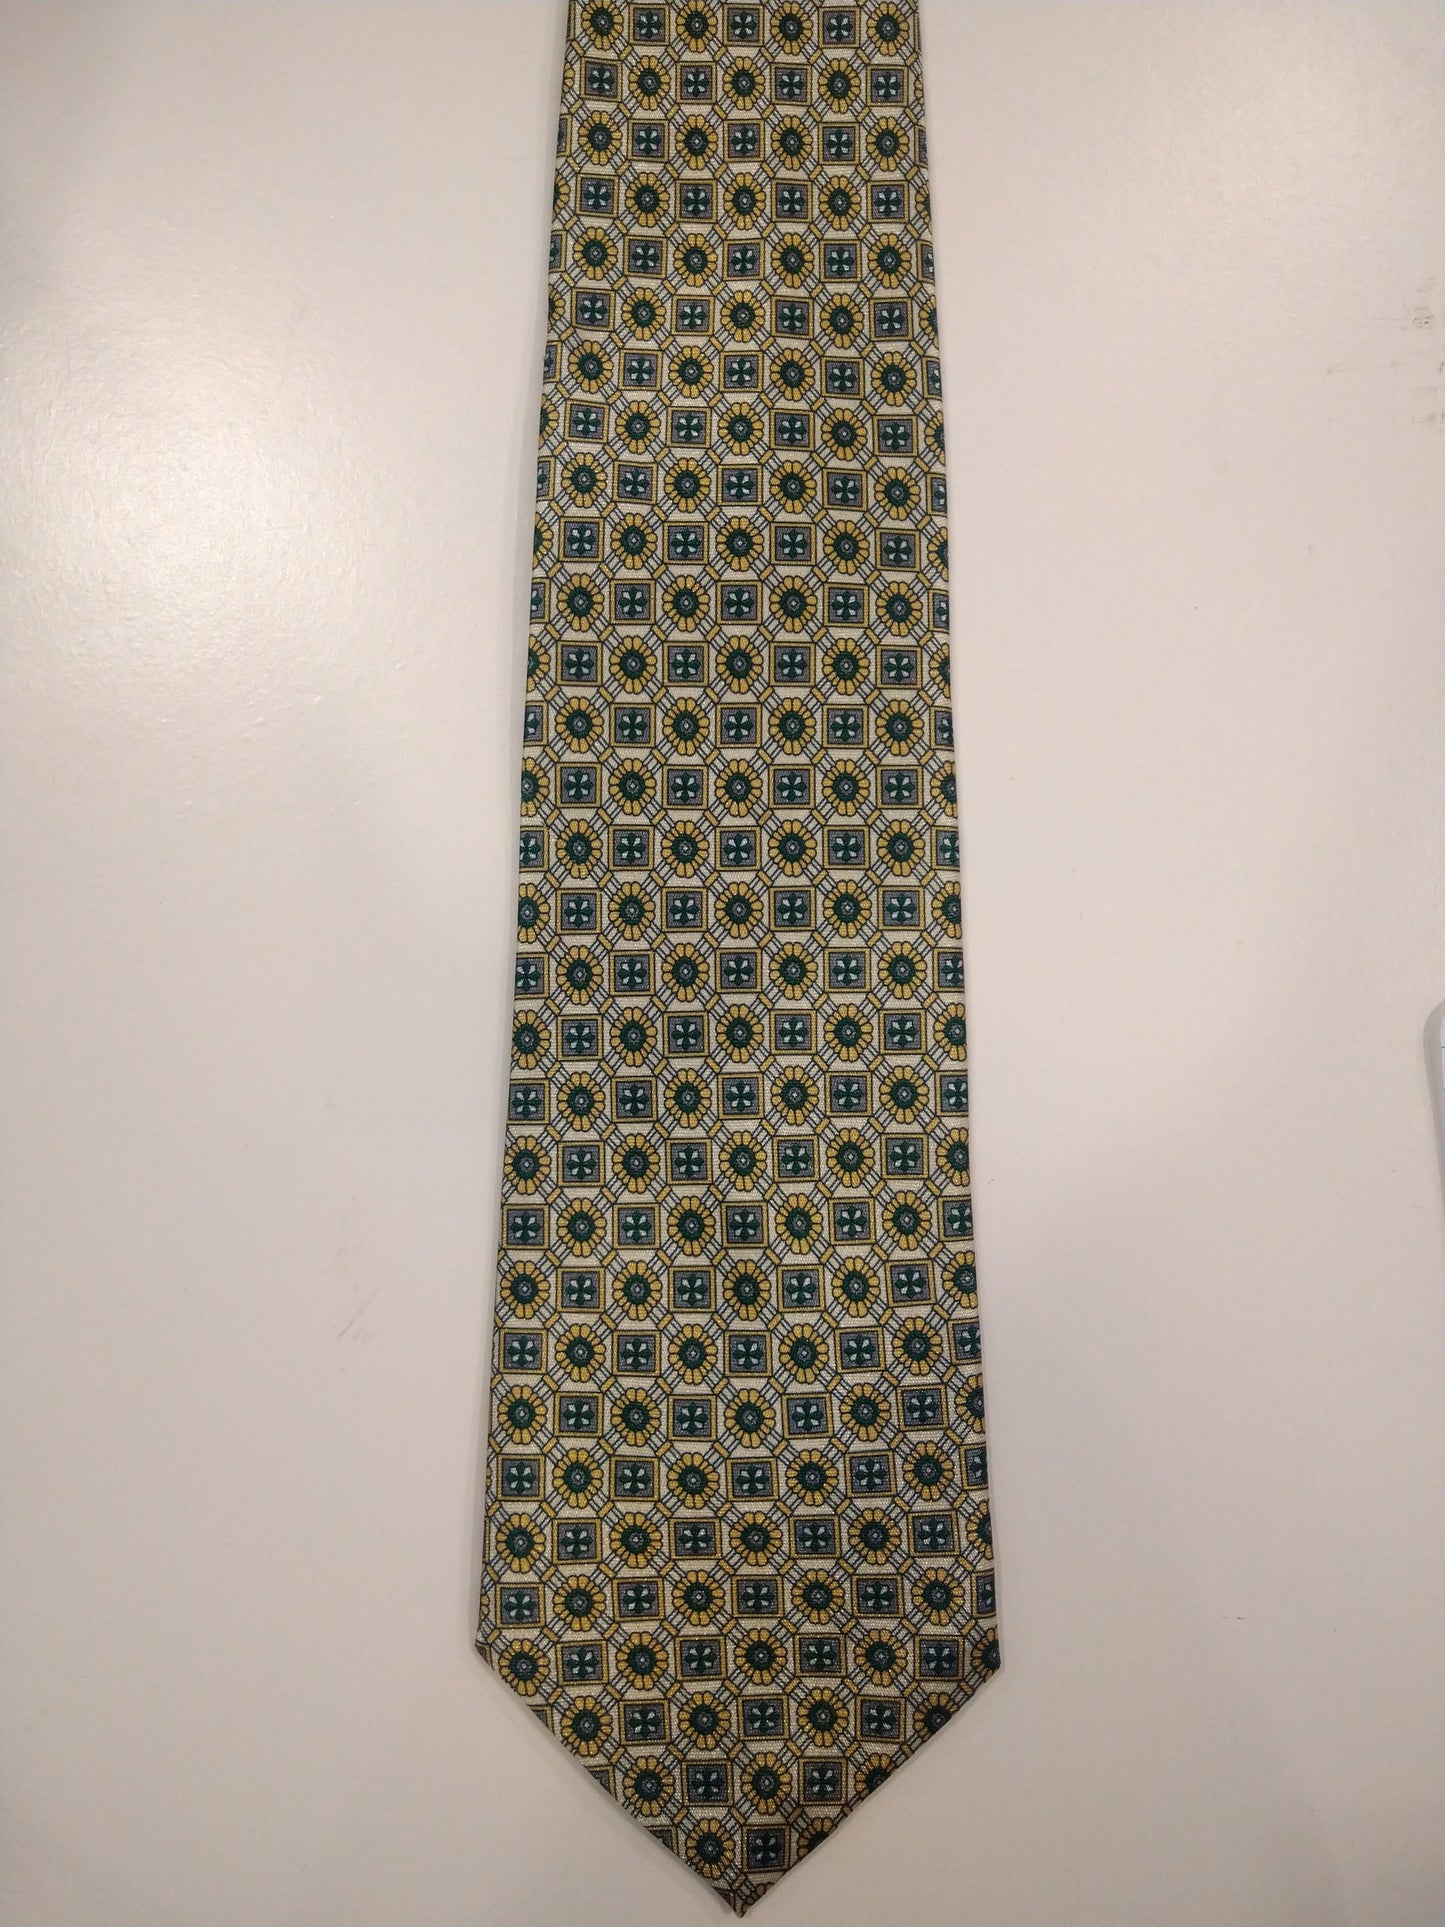 Jundipai soft polyester tie. Green beige gold shiny motif.